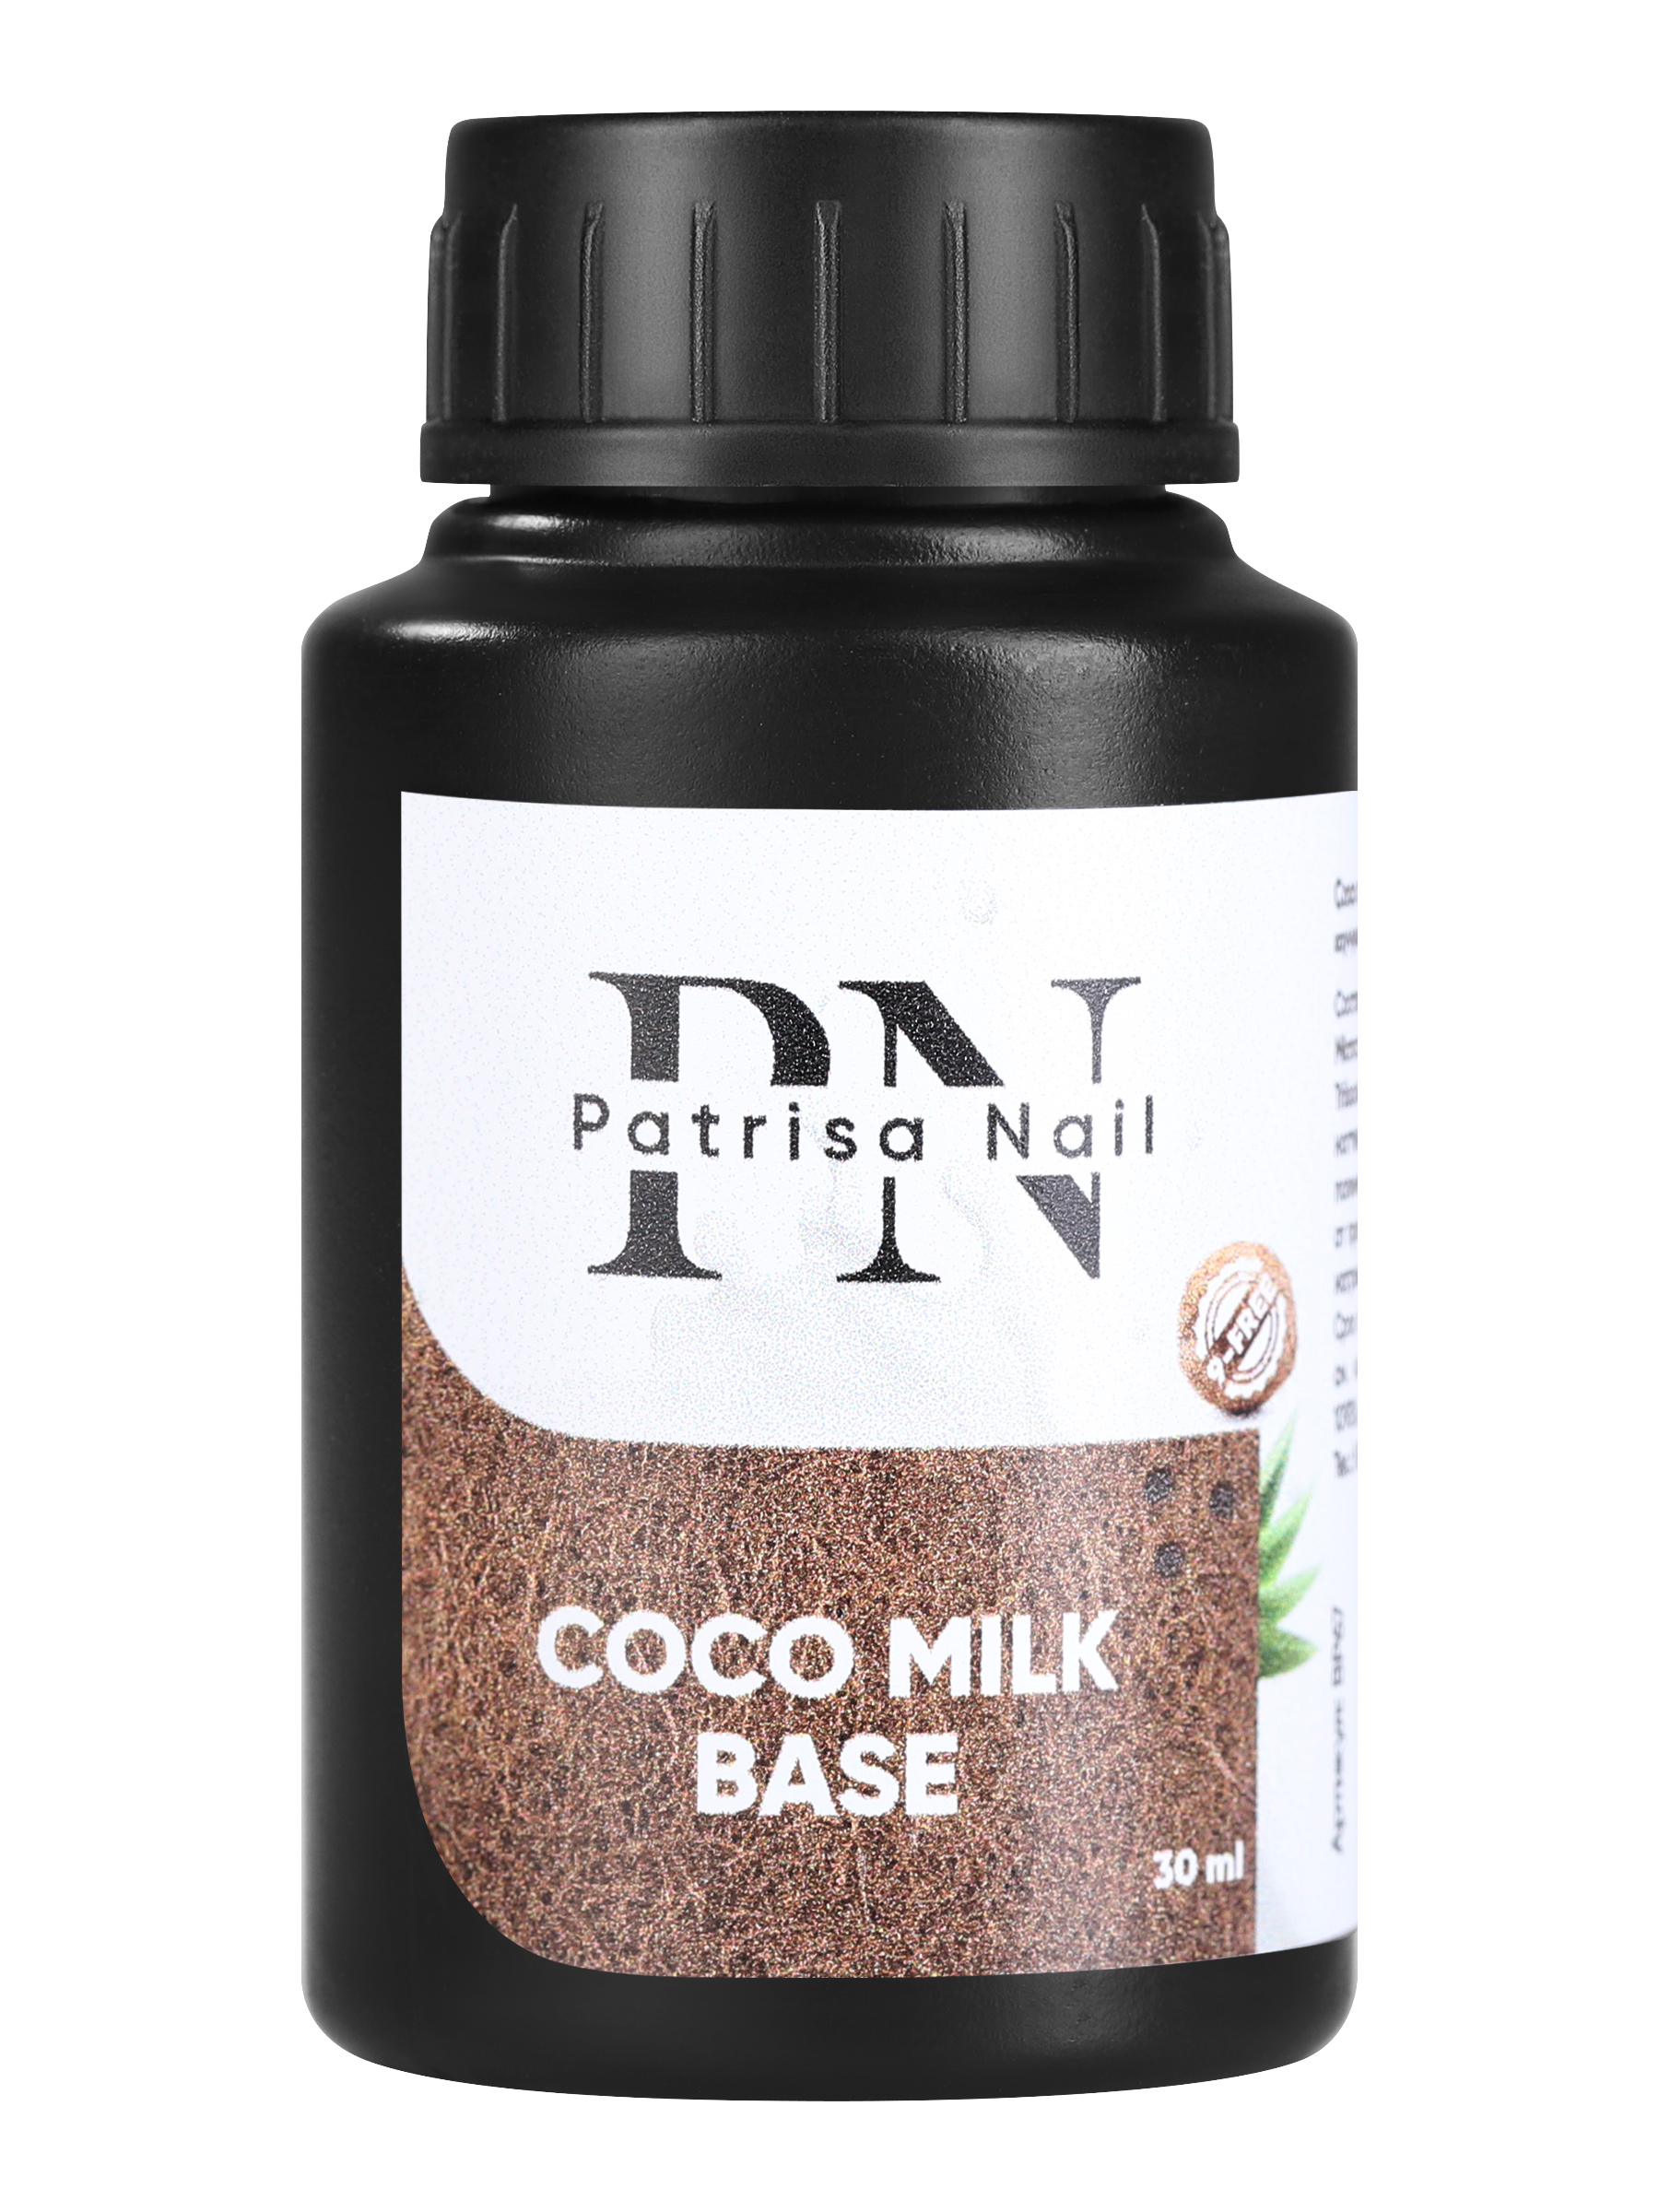 База для гель-лака Patrisa Nail Coco milk base камуфлирующая каучуковая молочная, 30 мл топ patrisa nail milk top молочный 8 мл